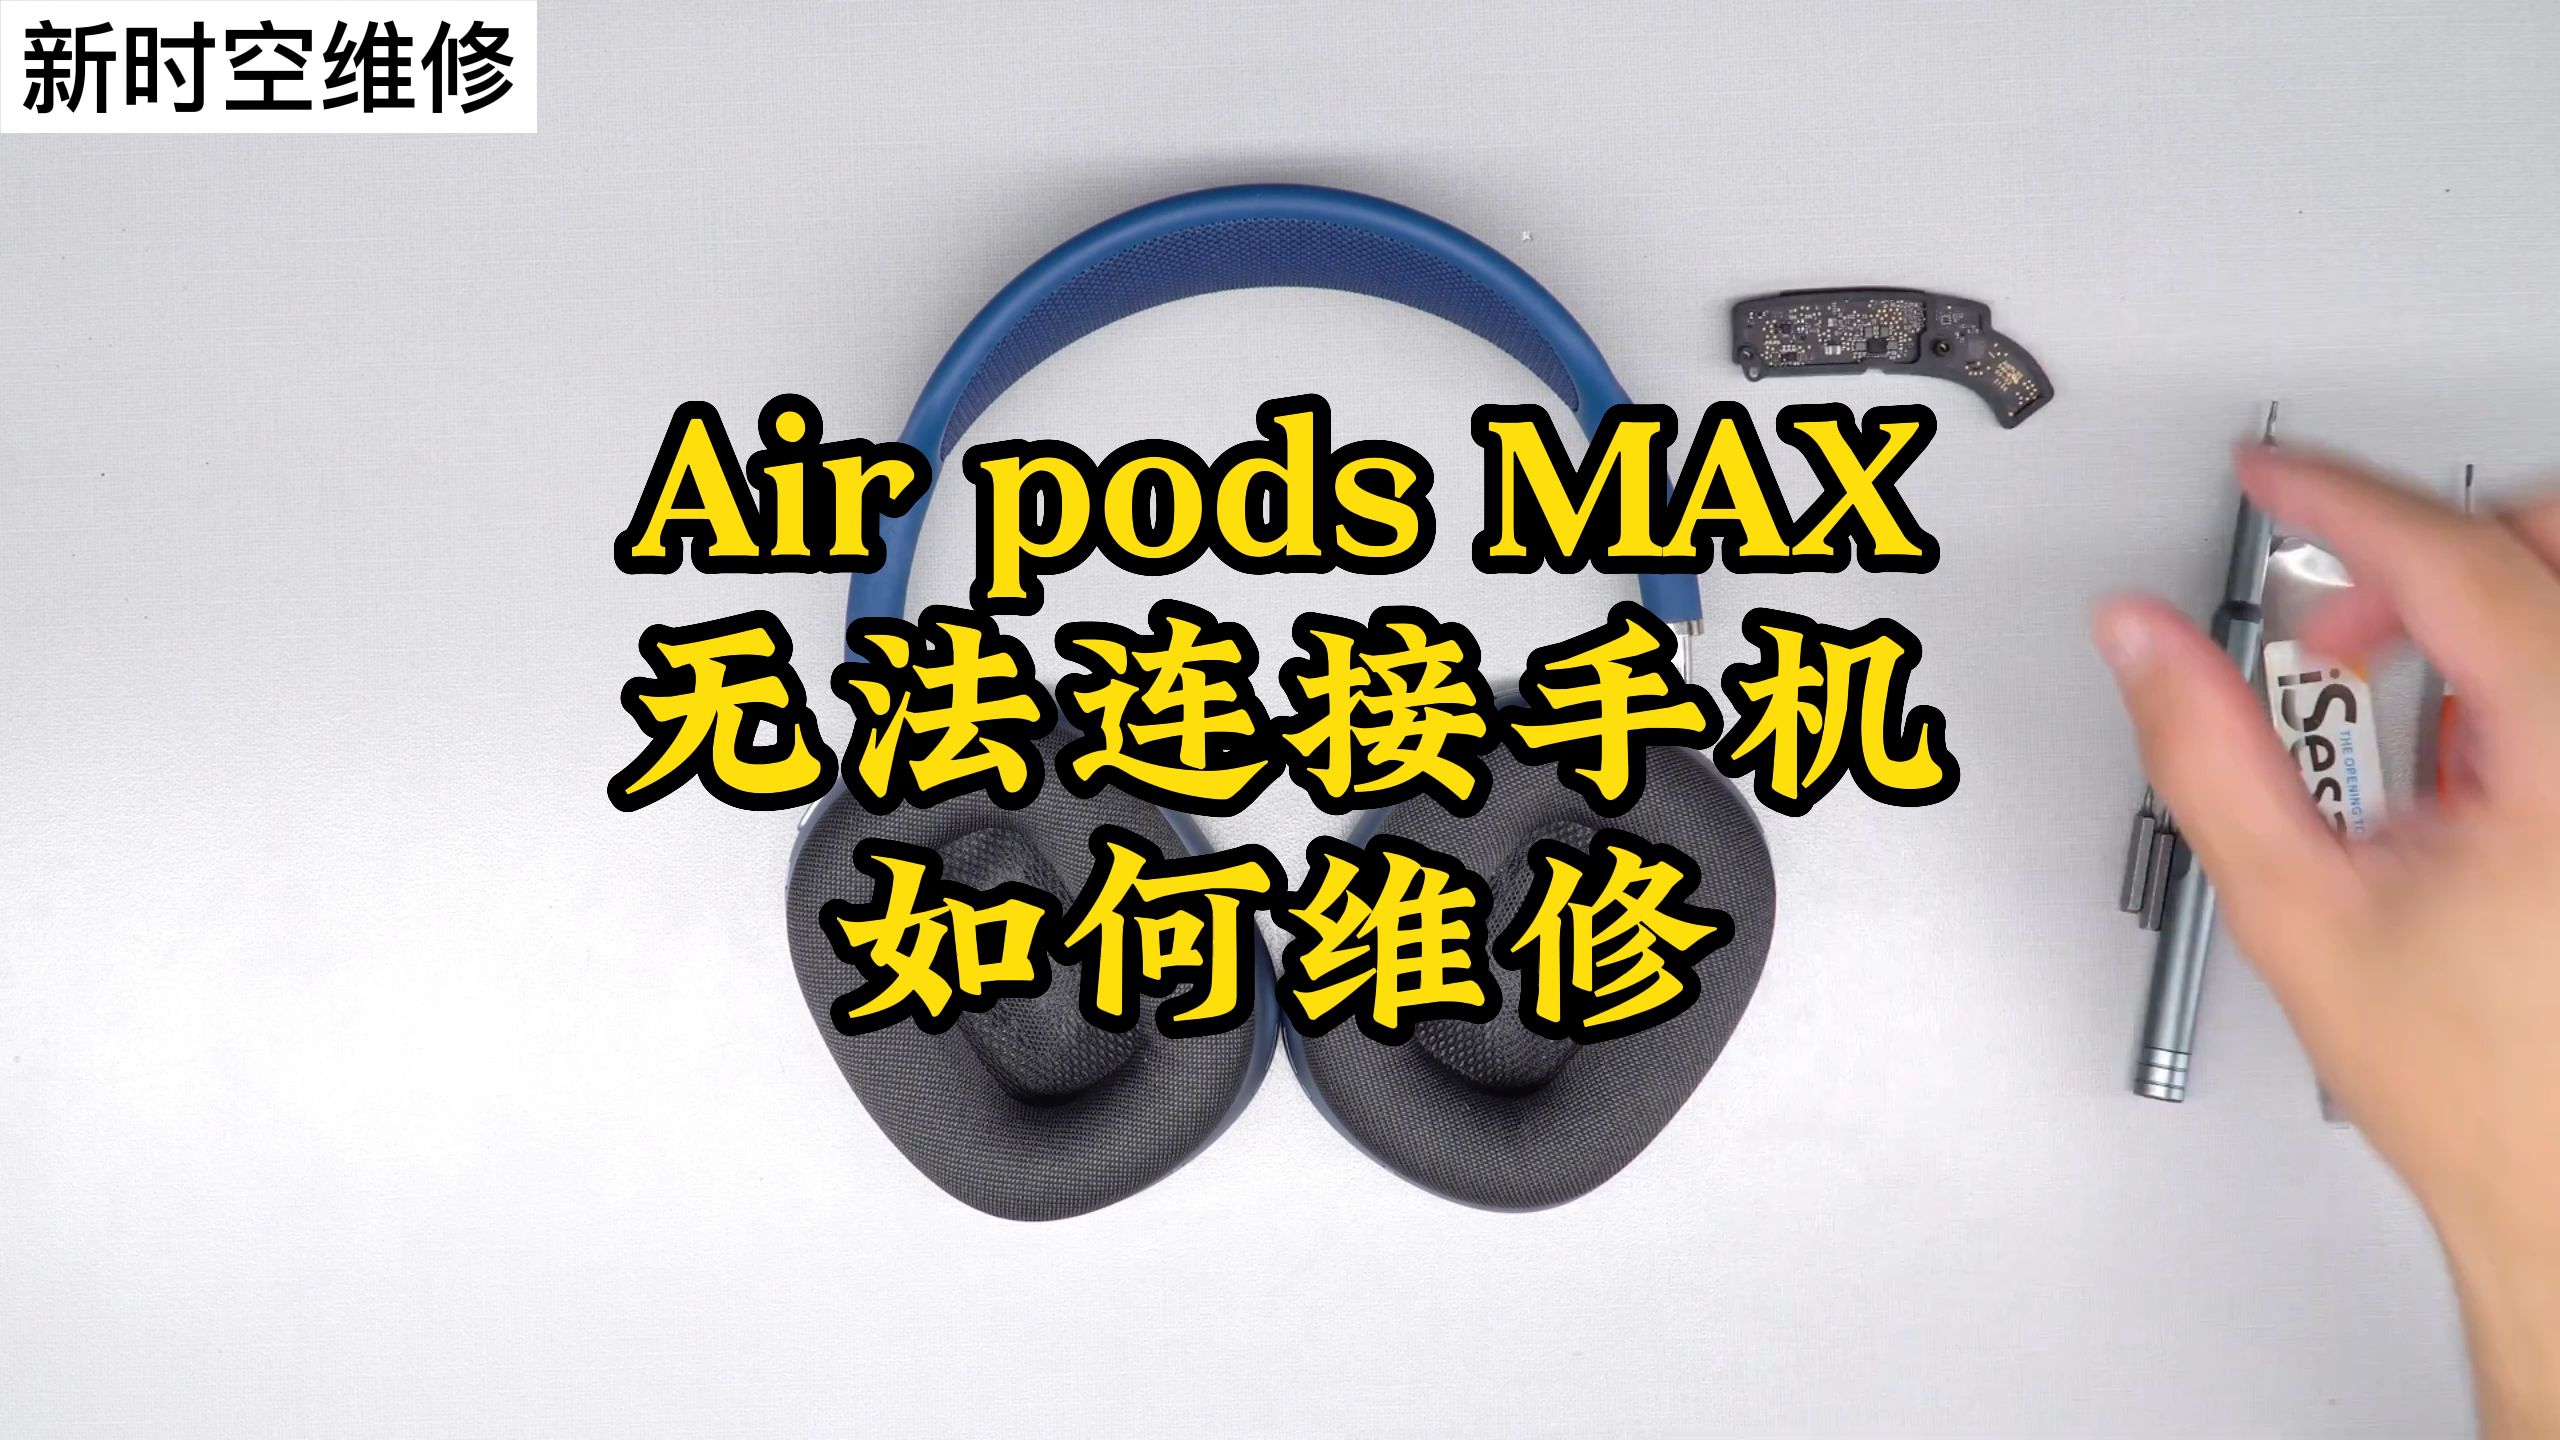 Air pods MAX无法连接手机如何维修